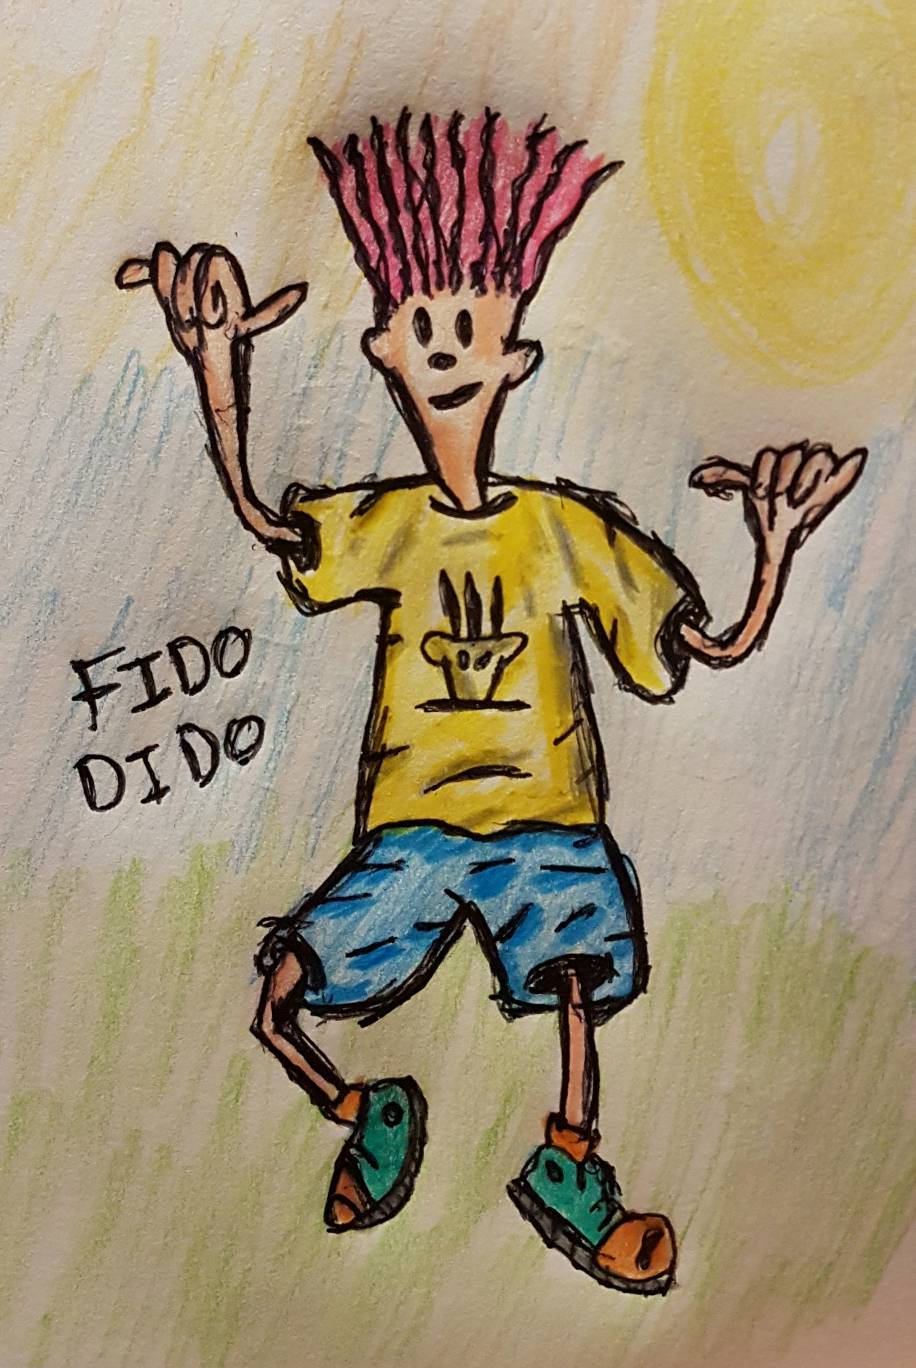 fido dido by grumguthrie on DeviantArt